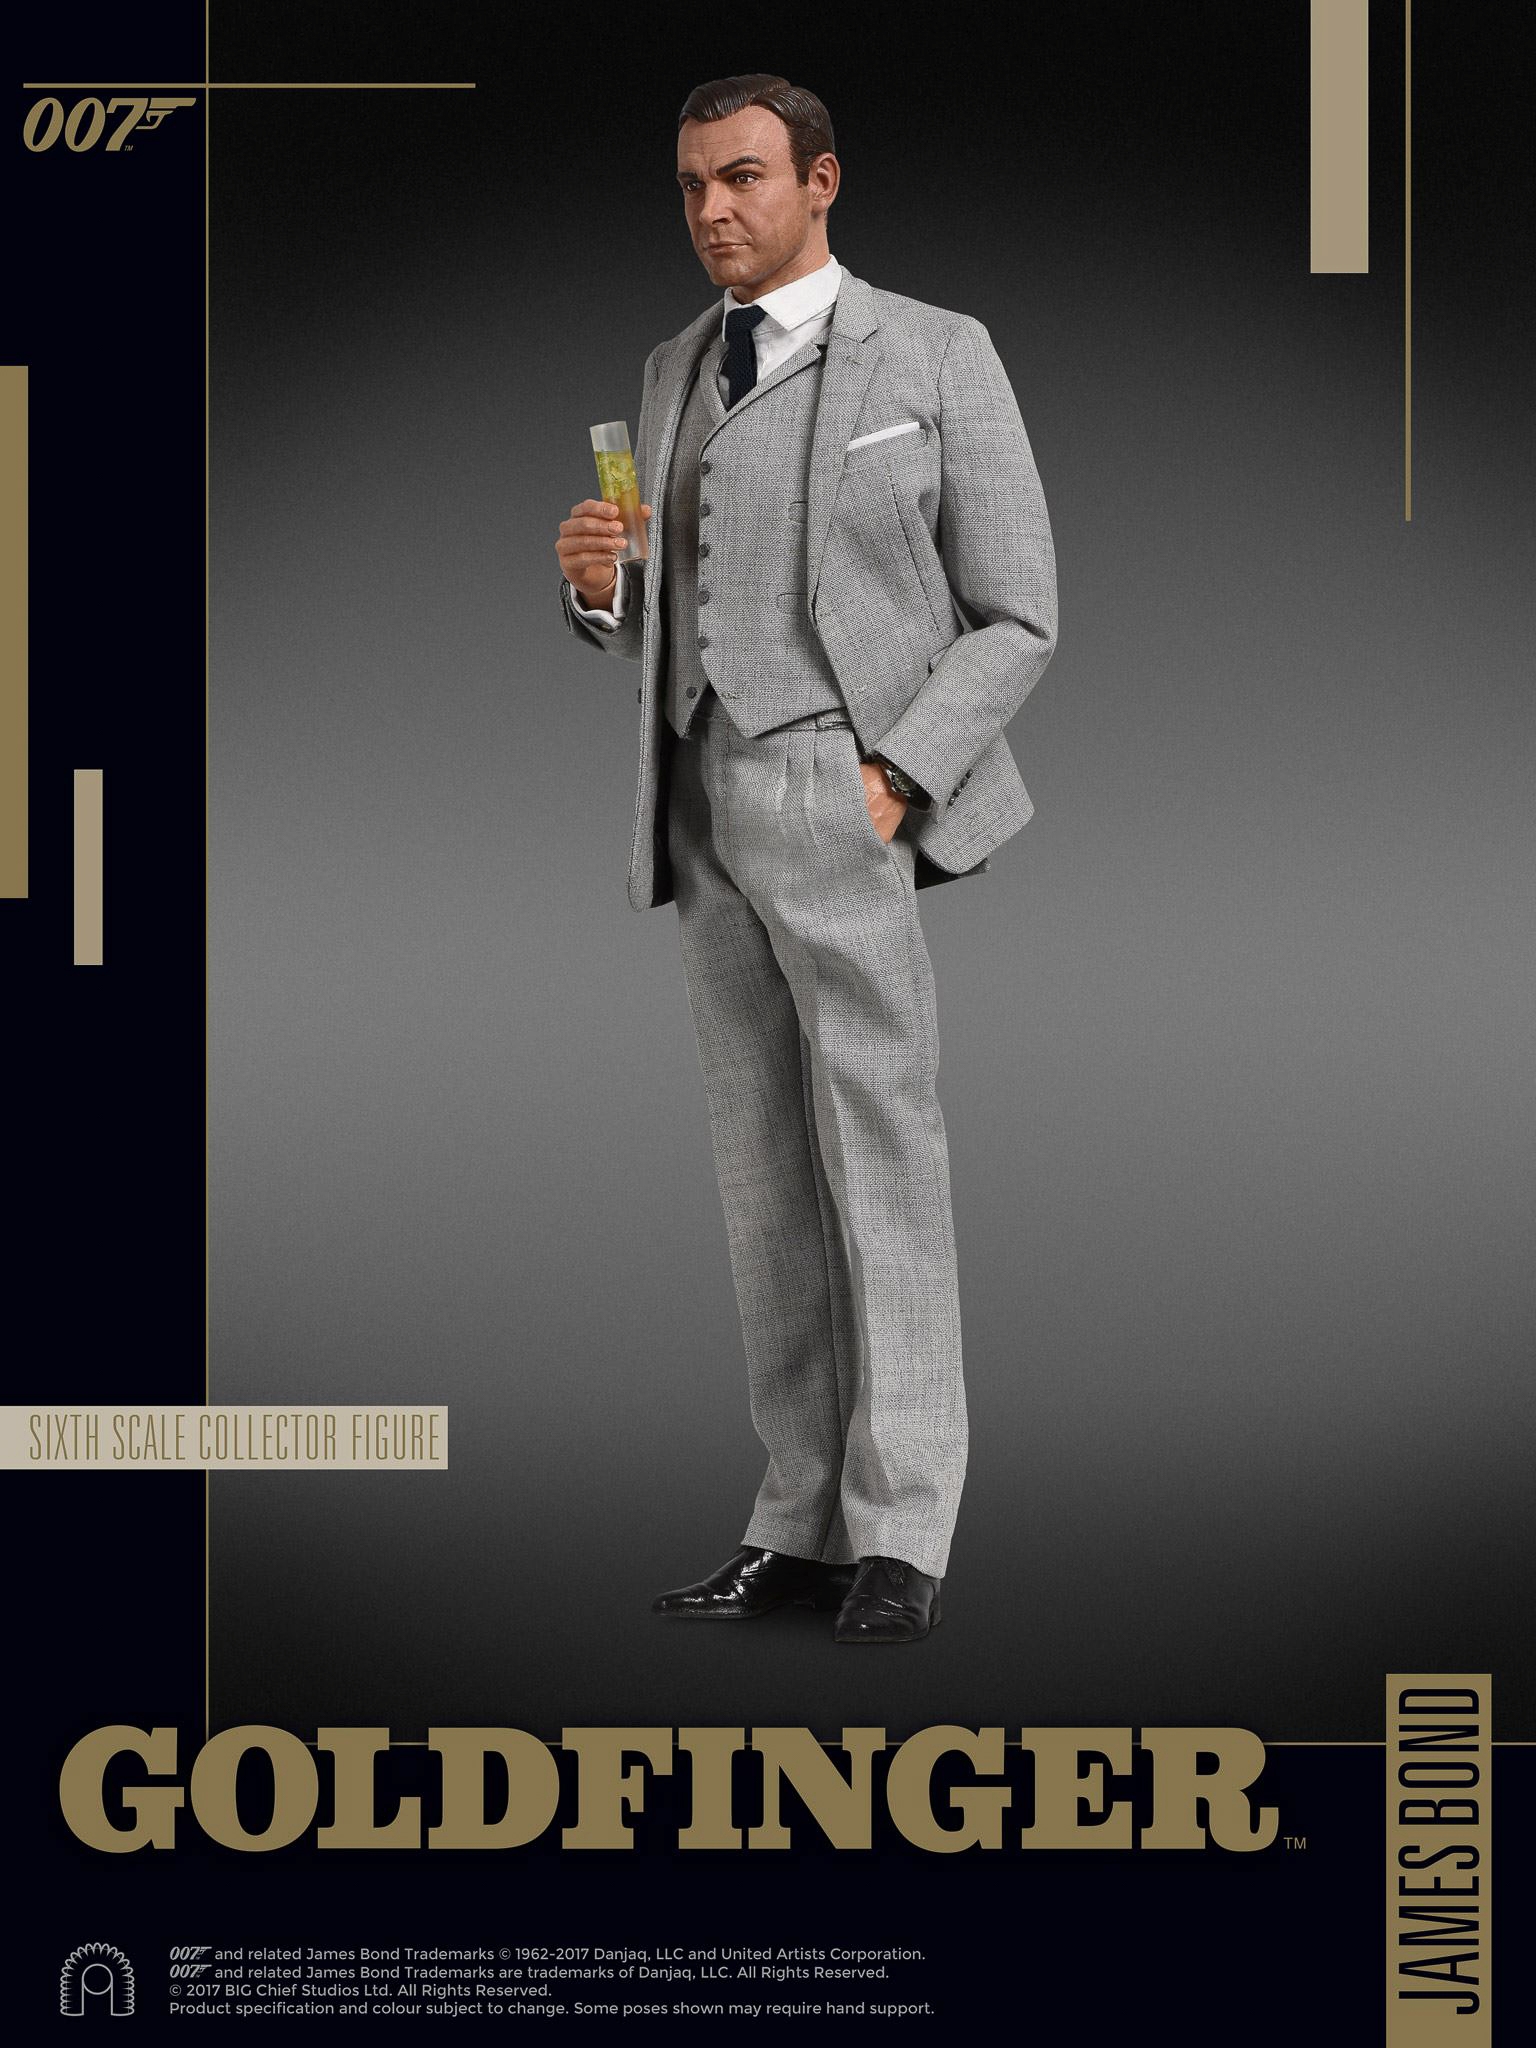 Big-Chief-James-Bond-Goldfinger-Oddjob-Full-Reveal-003.jpg